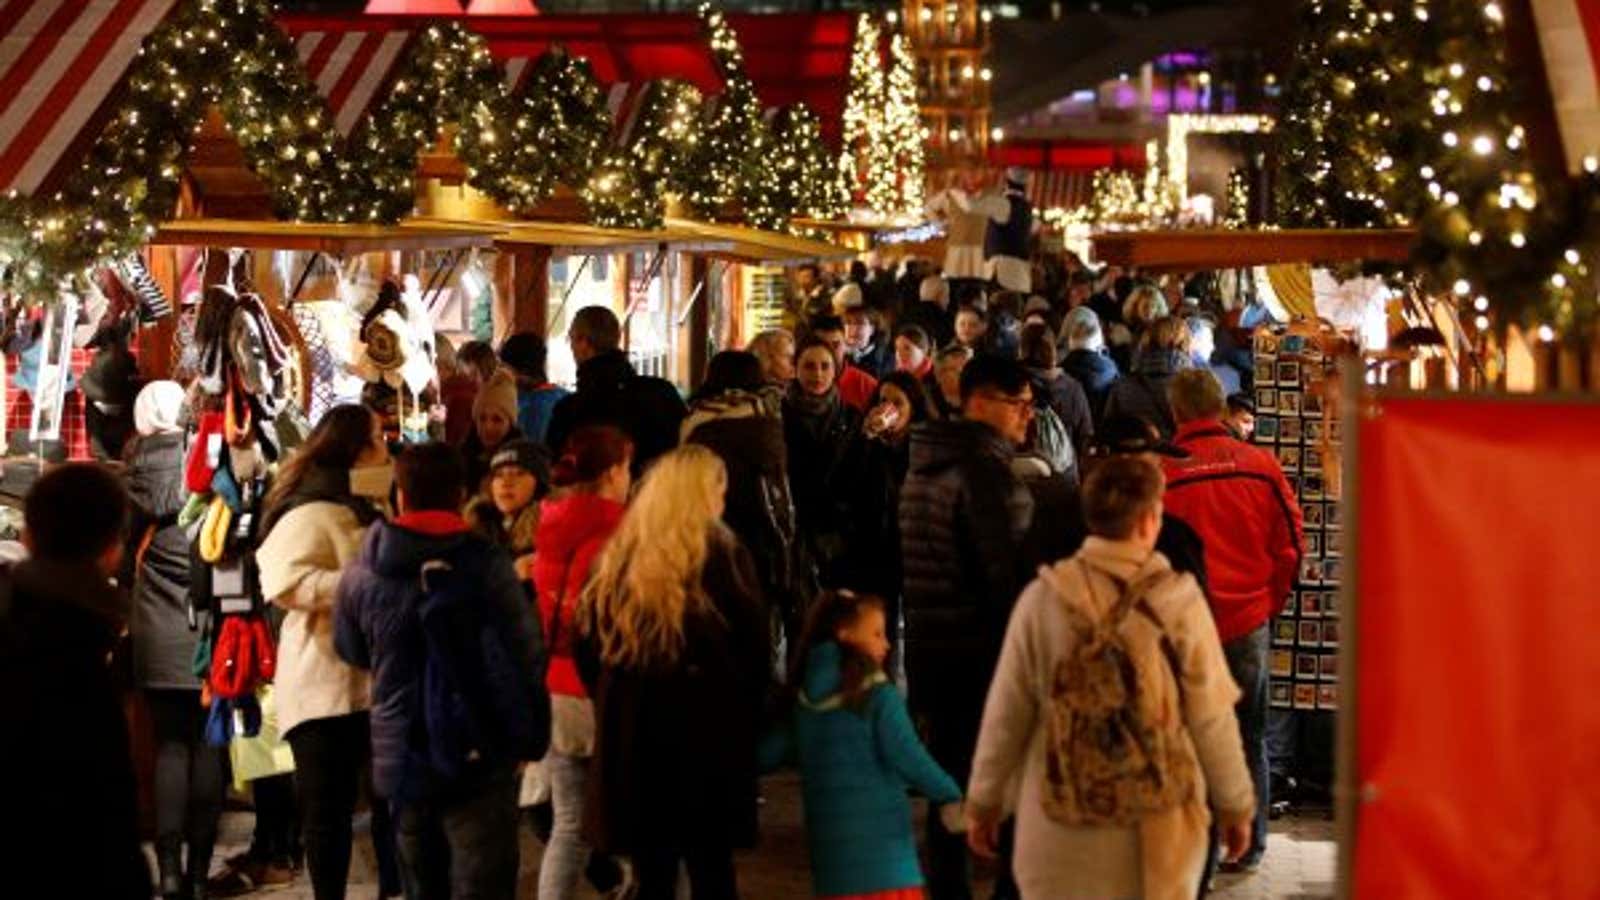 People visit the Christmas market near Alexanderplatz square in Berlin, Germany, November 23, 2016.